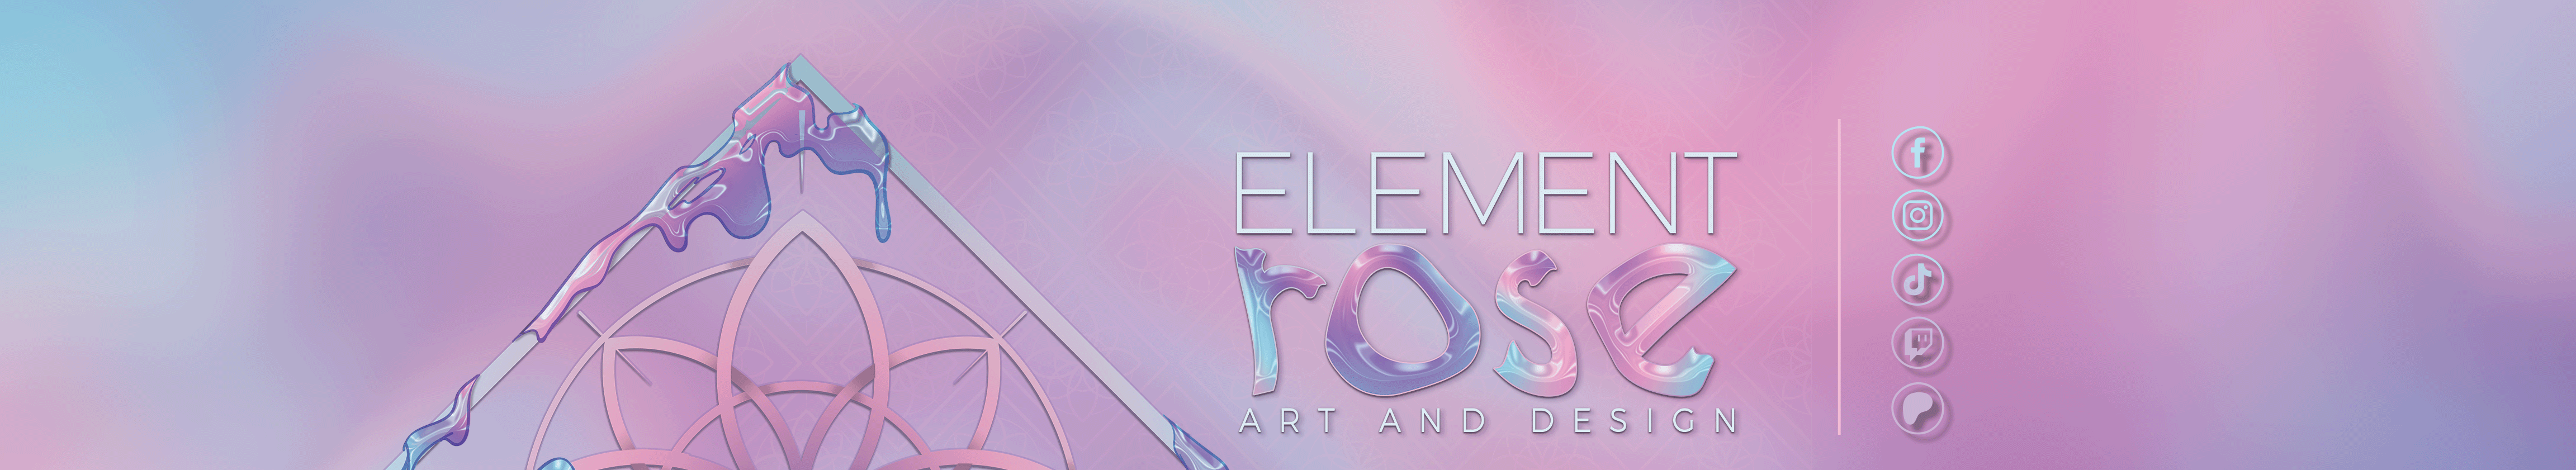 Element Rose's profile banner